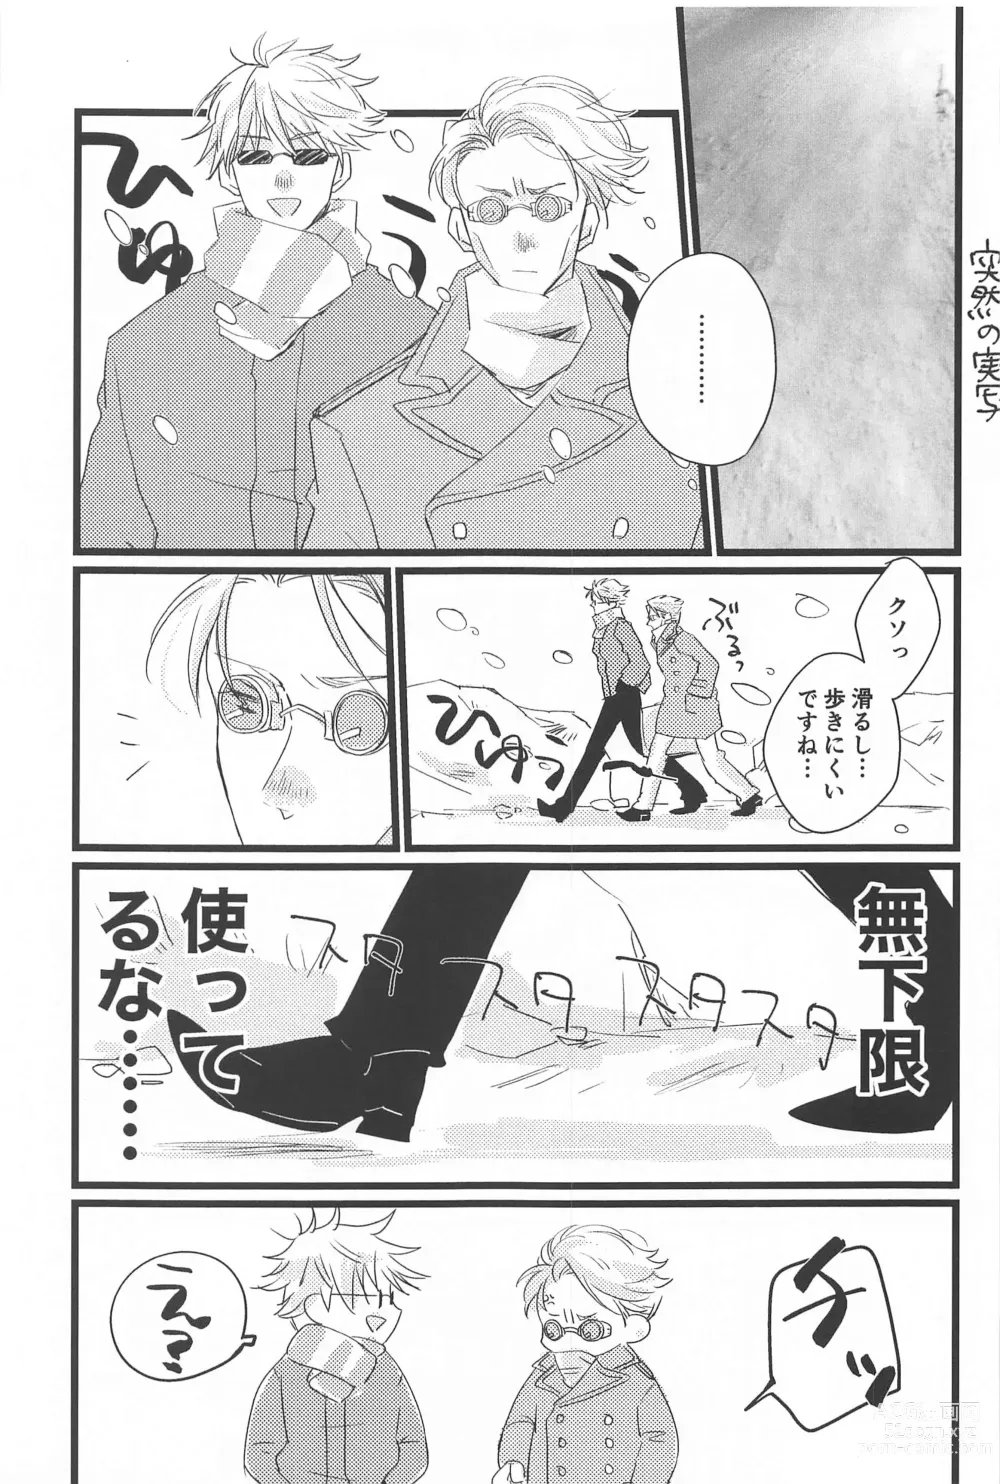 Page 6 of doujinshi timeless memory 2